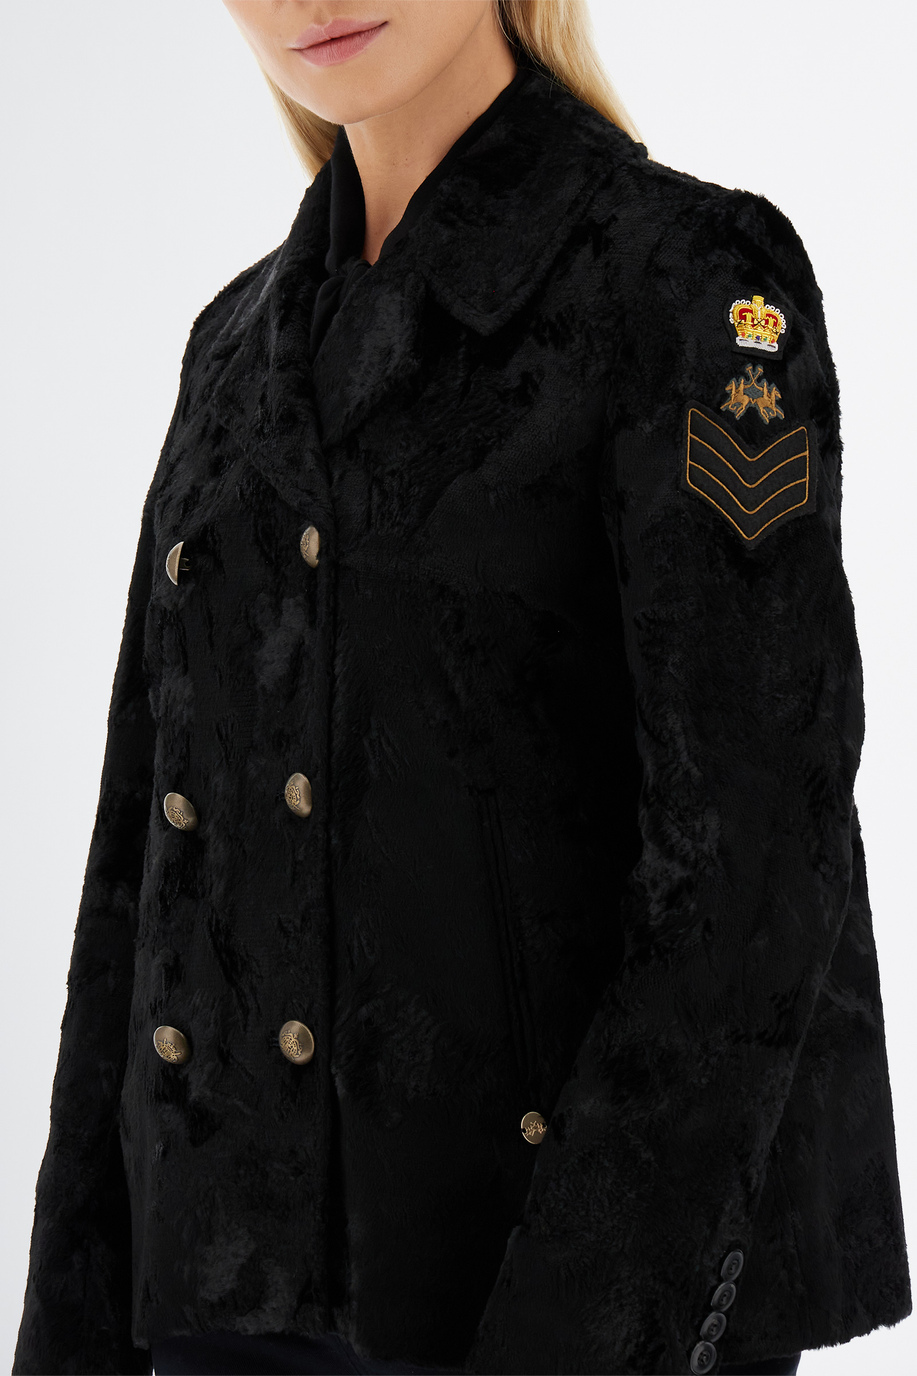 Women’s Long Sleeve England Jacket with Fur - Elegant looks for her | La Martina - Official Online Shop